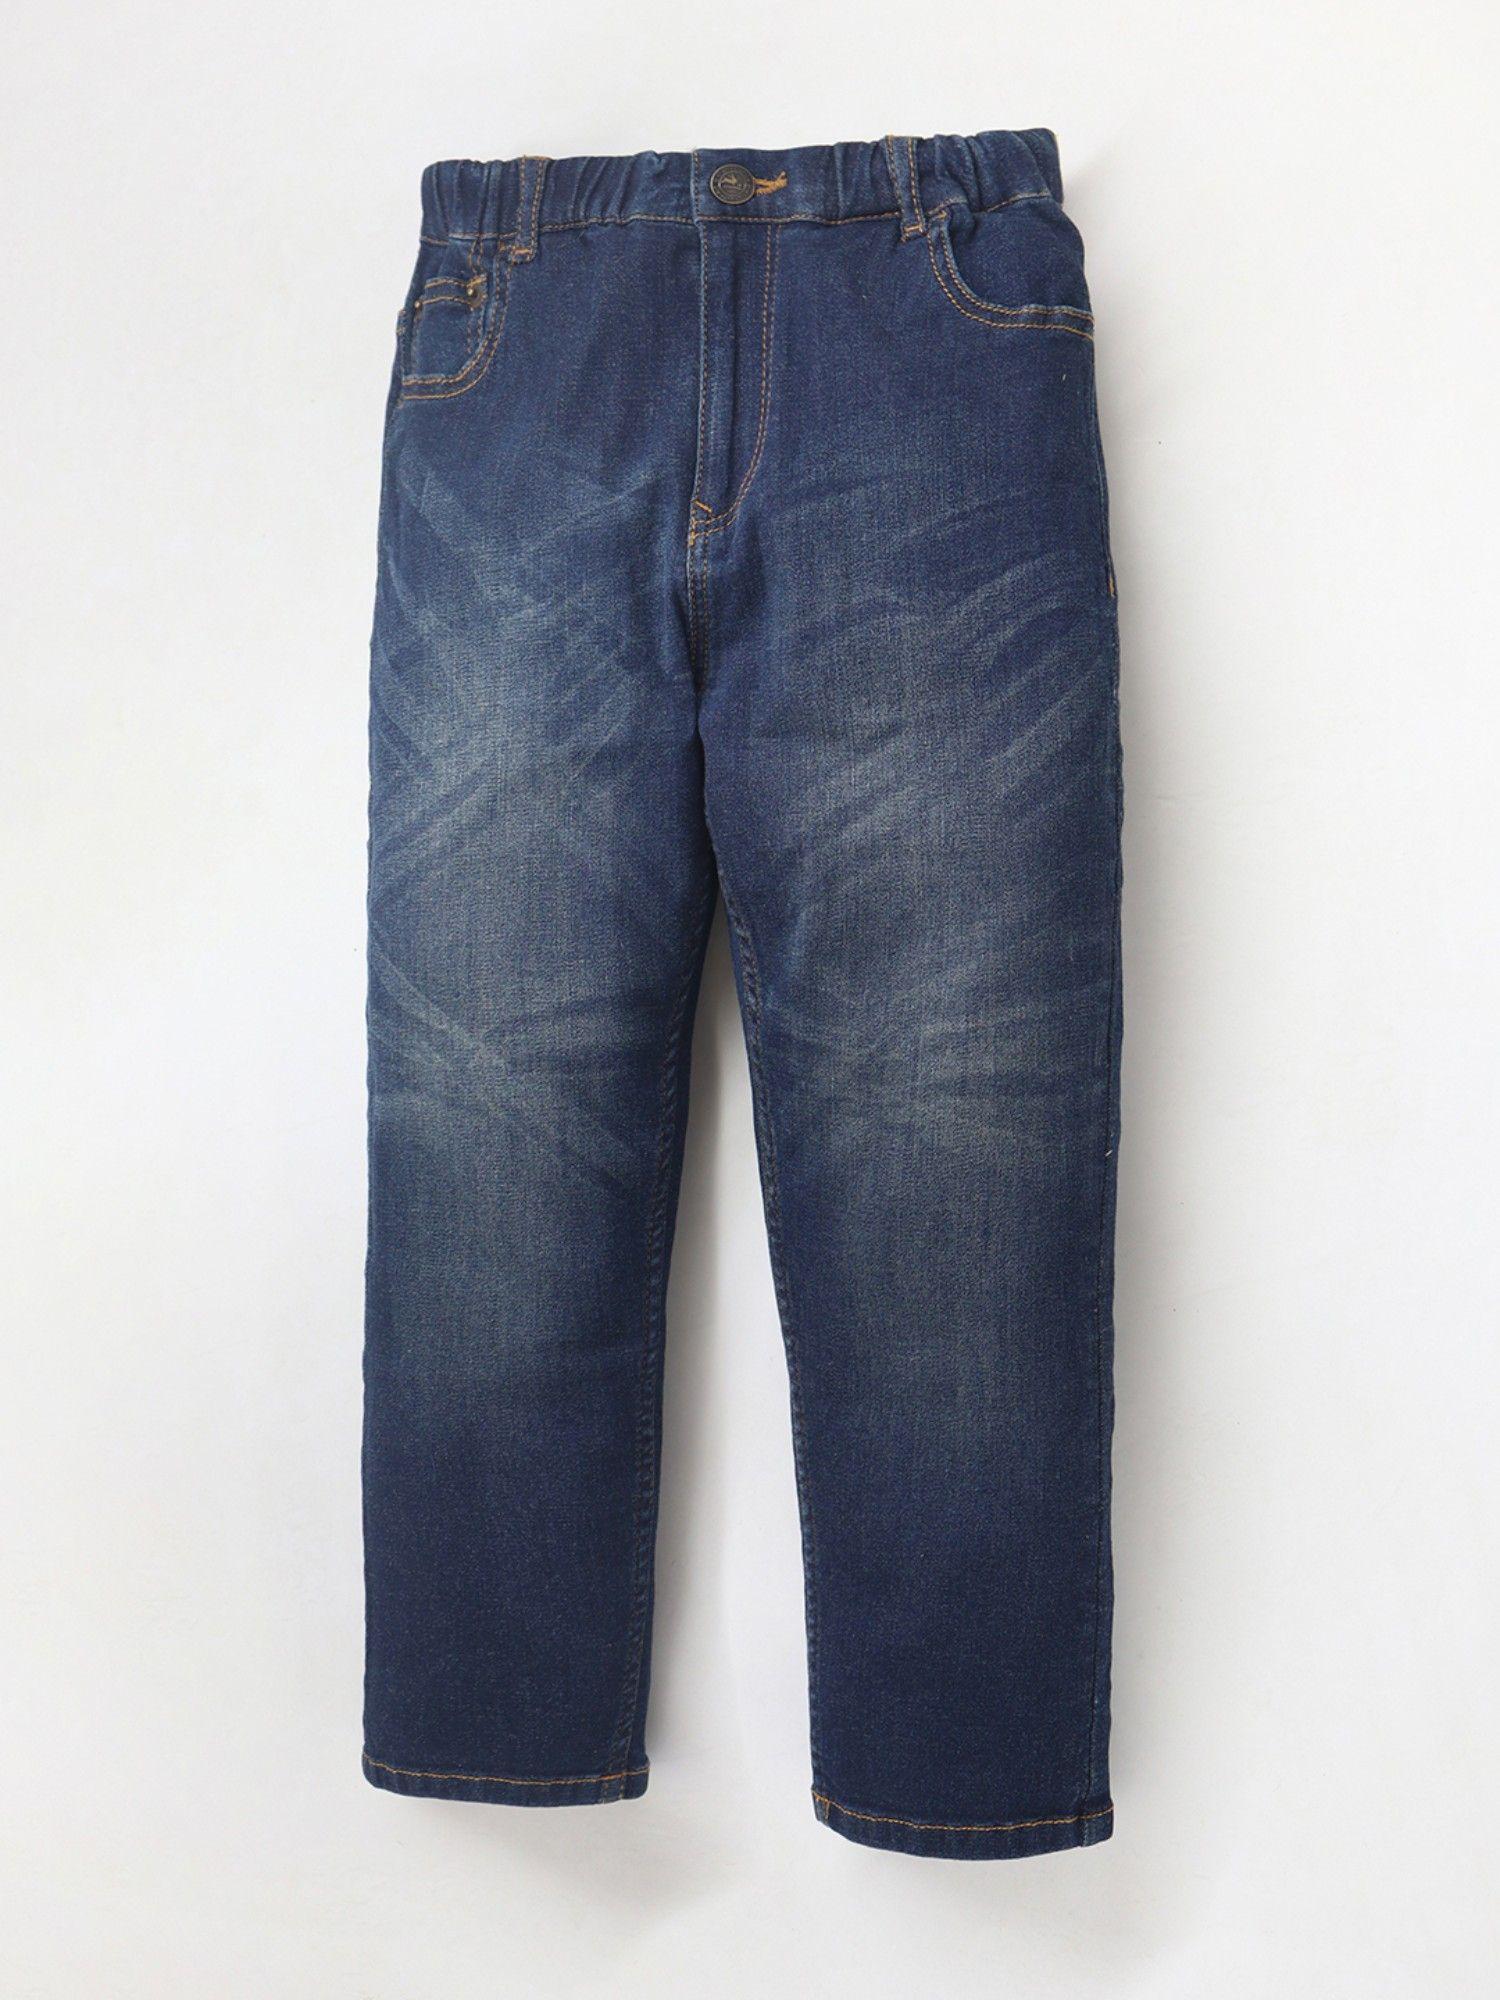 kids navy blue denim jeans for timeless appeal